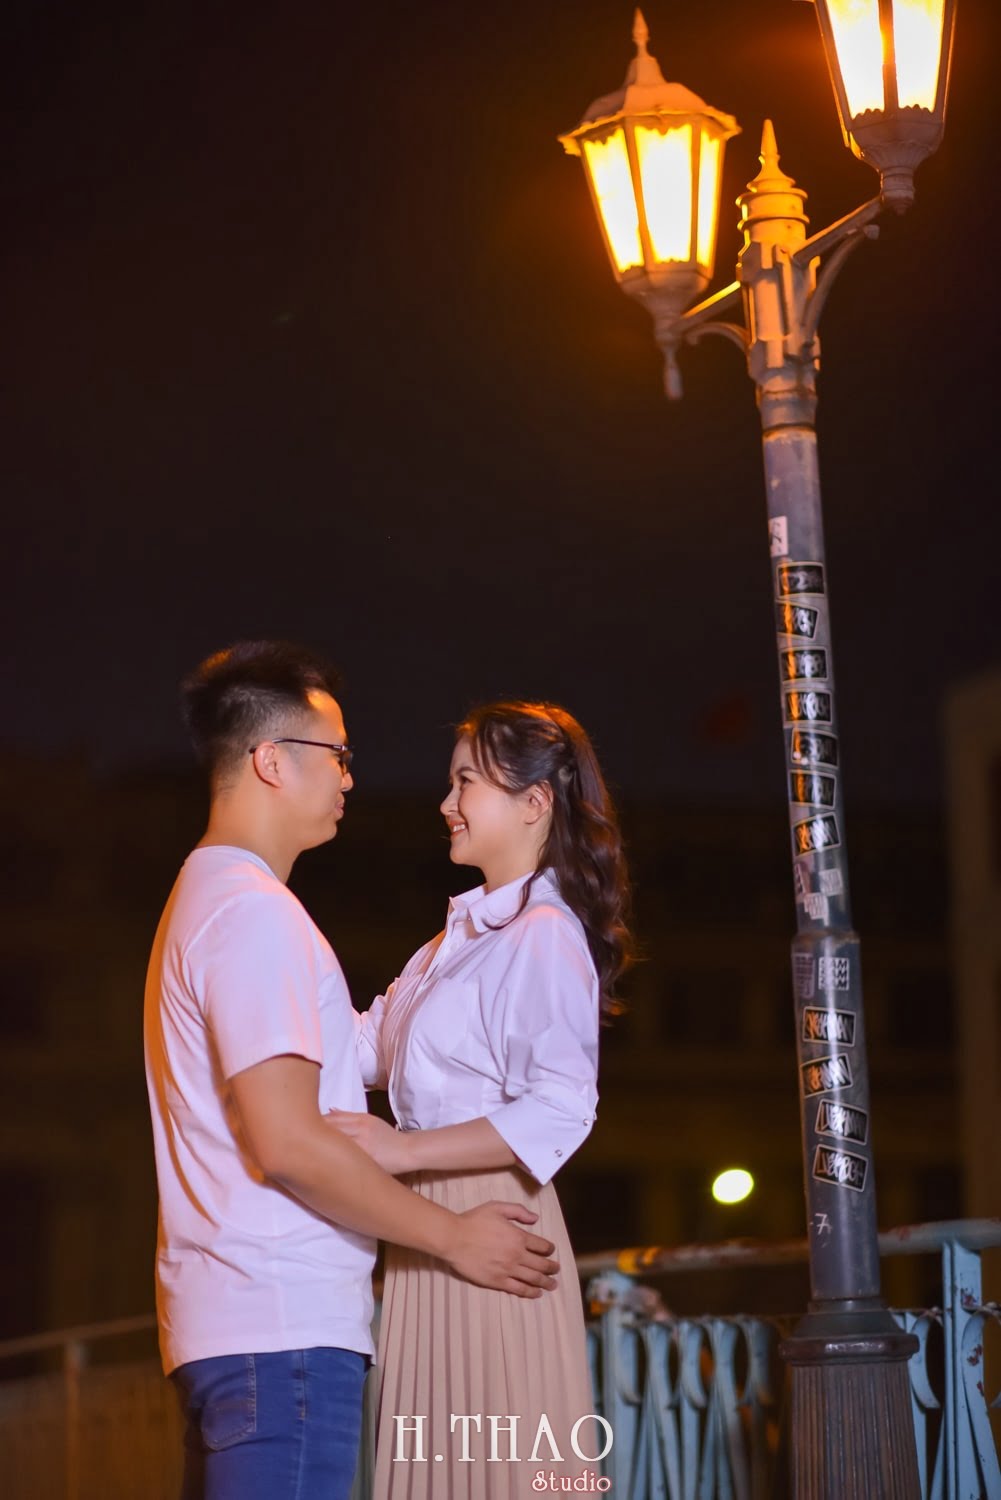 Anh chup couple ban dem 5 min - Album ảnh couple chụp buổi tối đẹp lung linh - HThao Studio